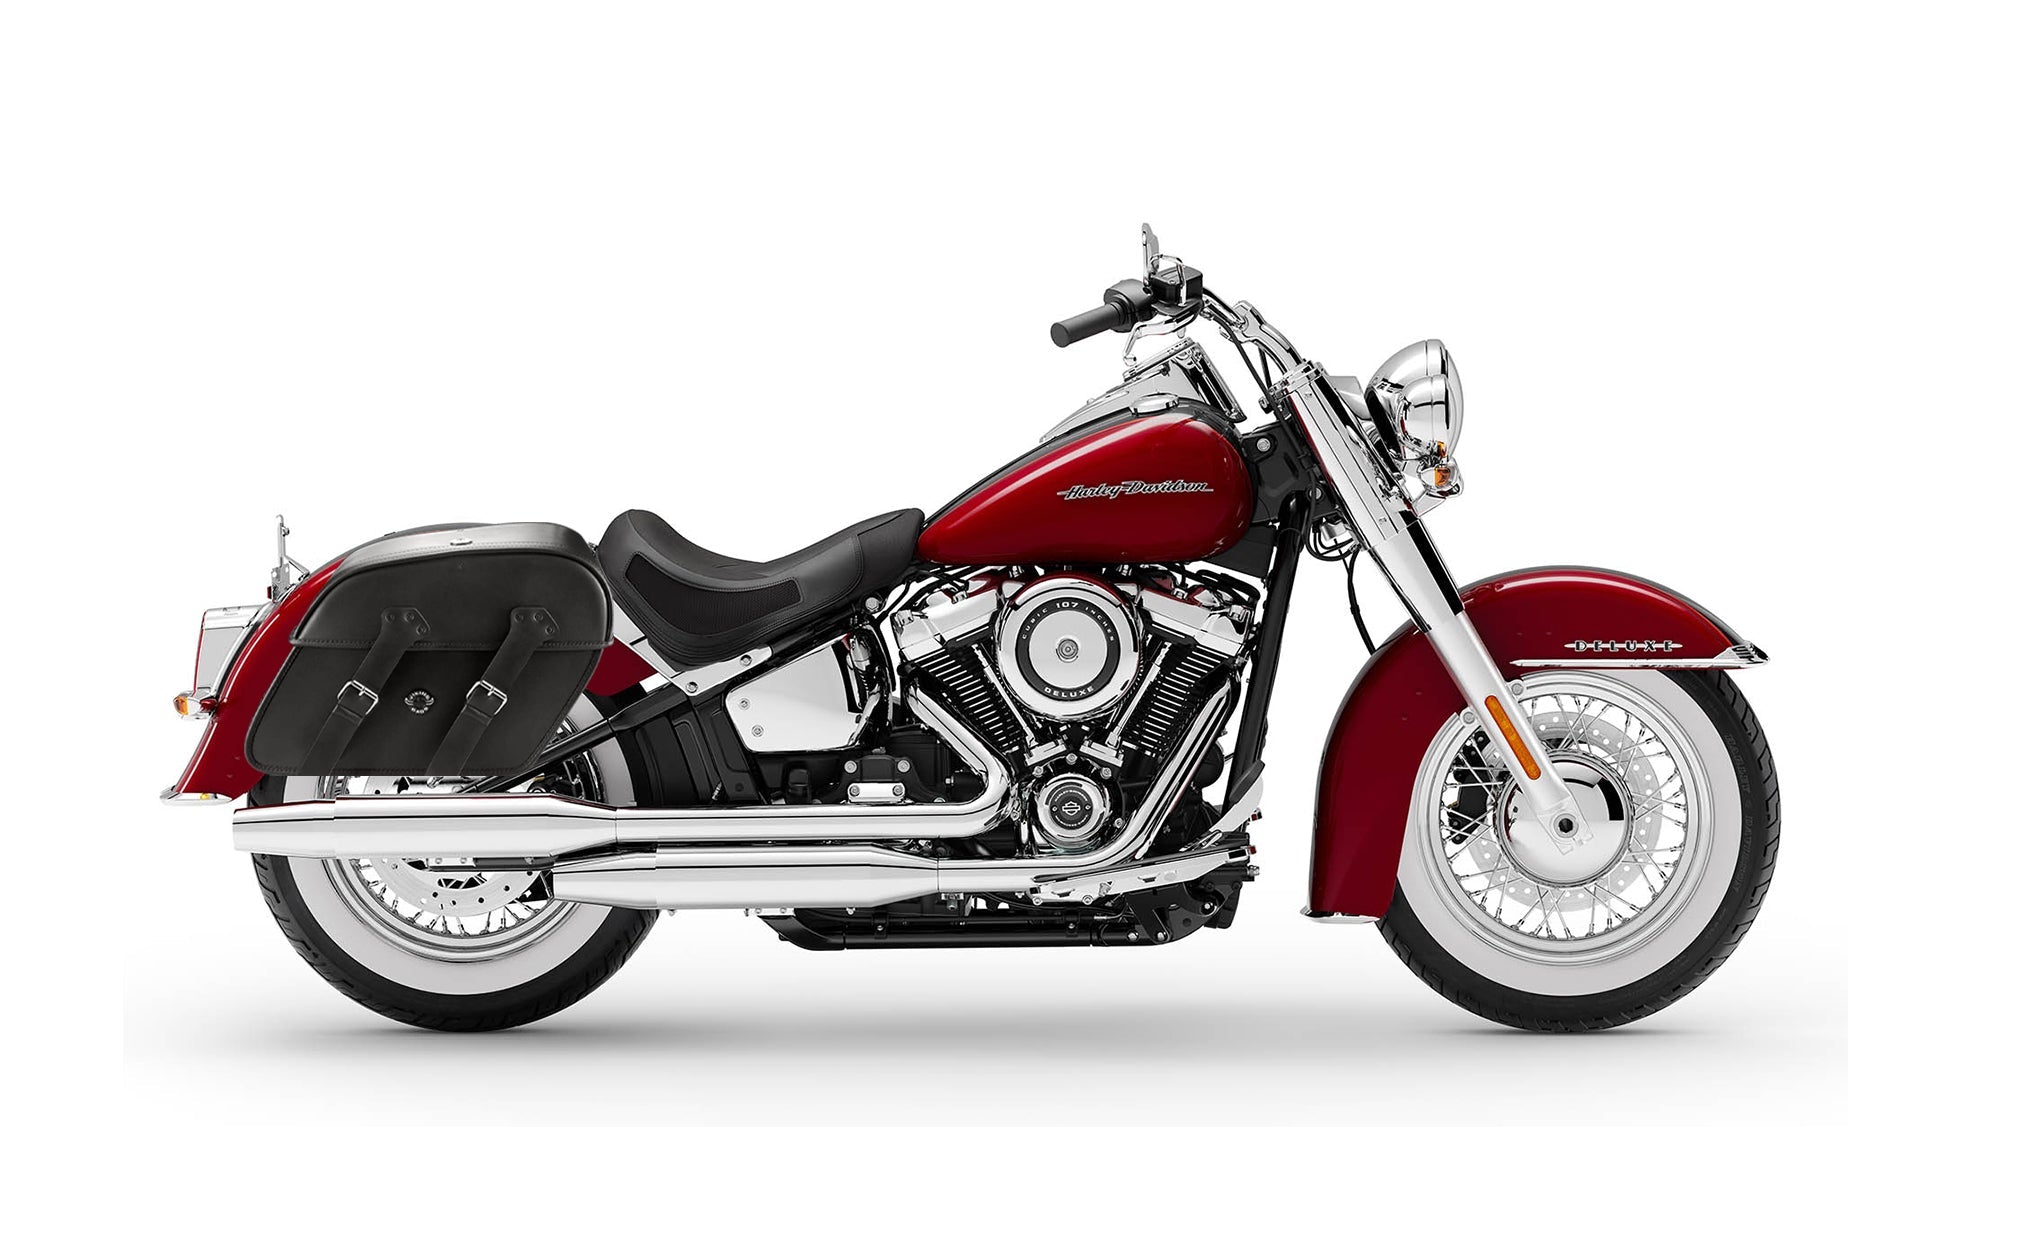 Viking Raven Large Motorcycle Leather Saddlebags For Harley Softail Deluxe Flstn I on Bike Photo @expand